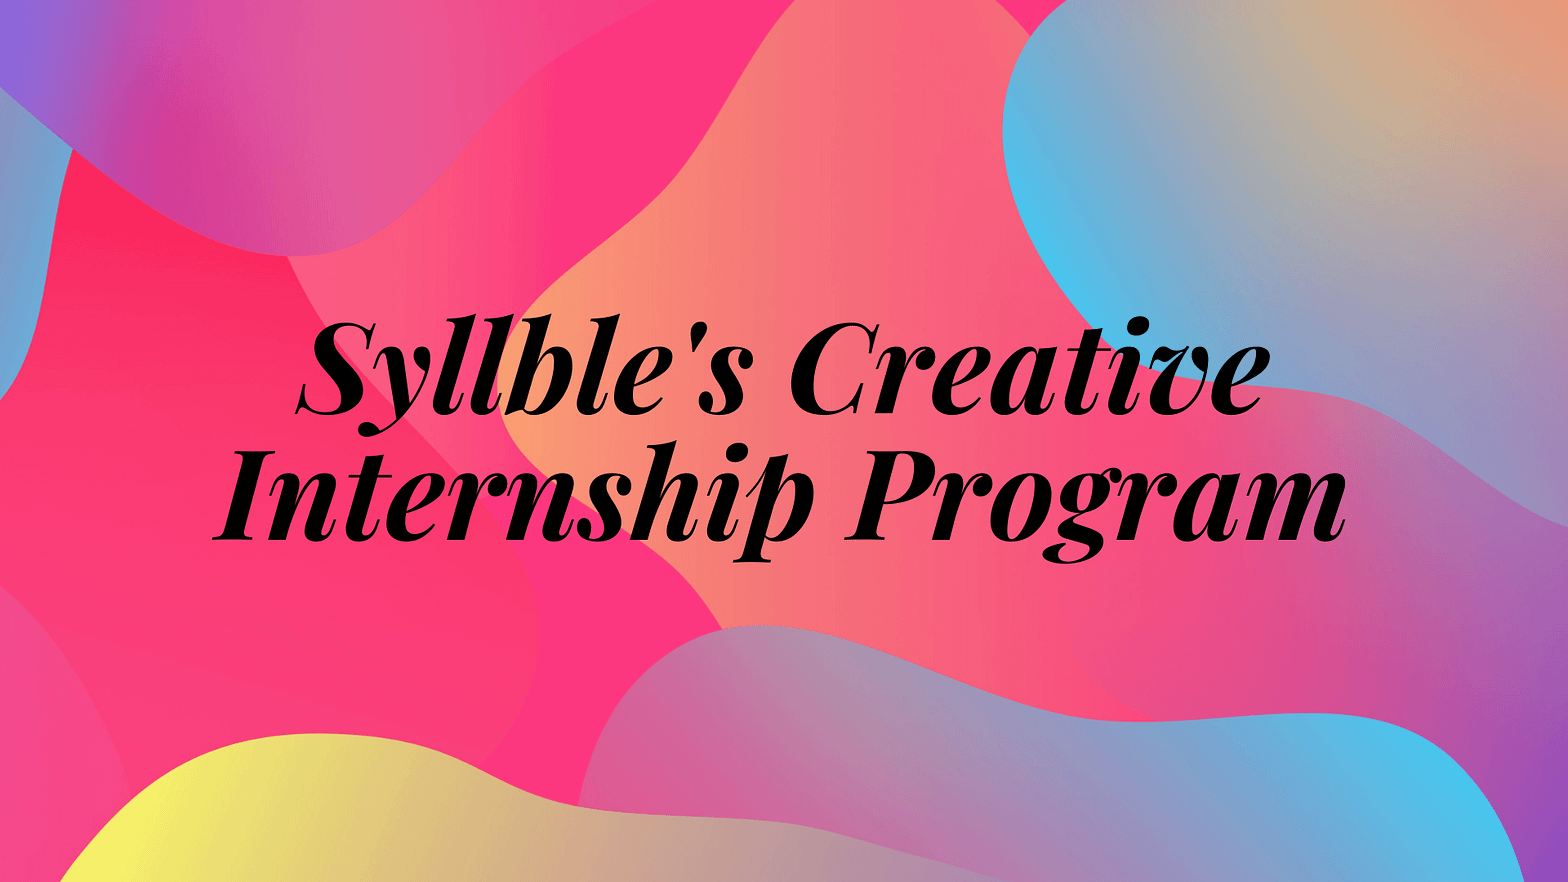 The Creative Internship Program at Syllble